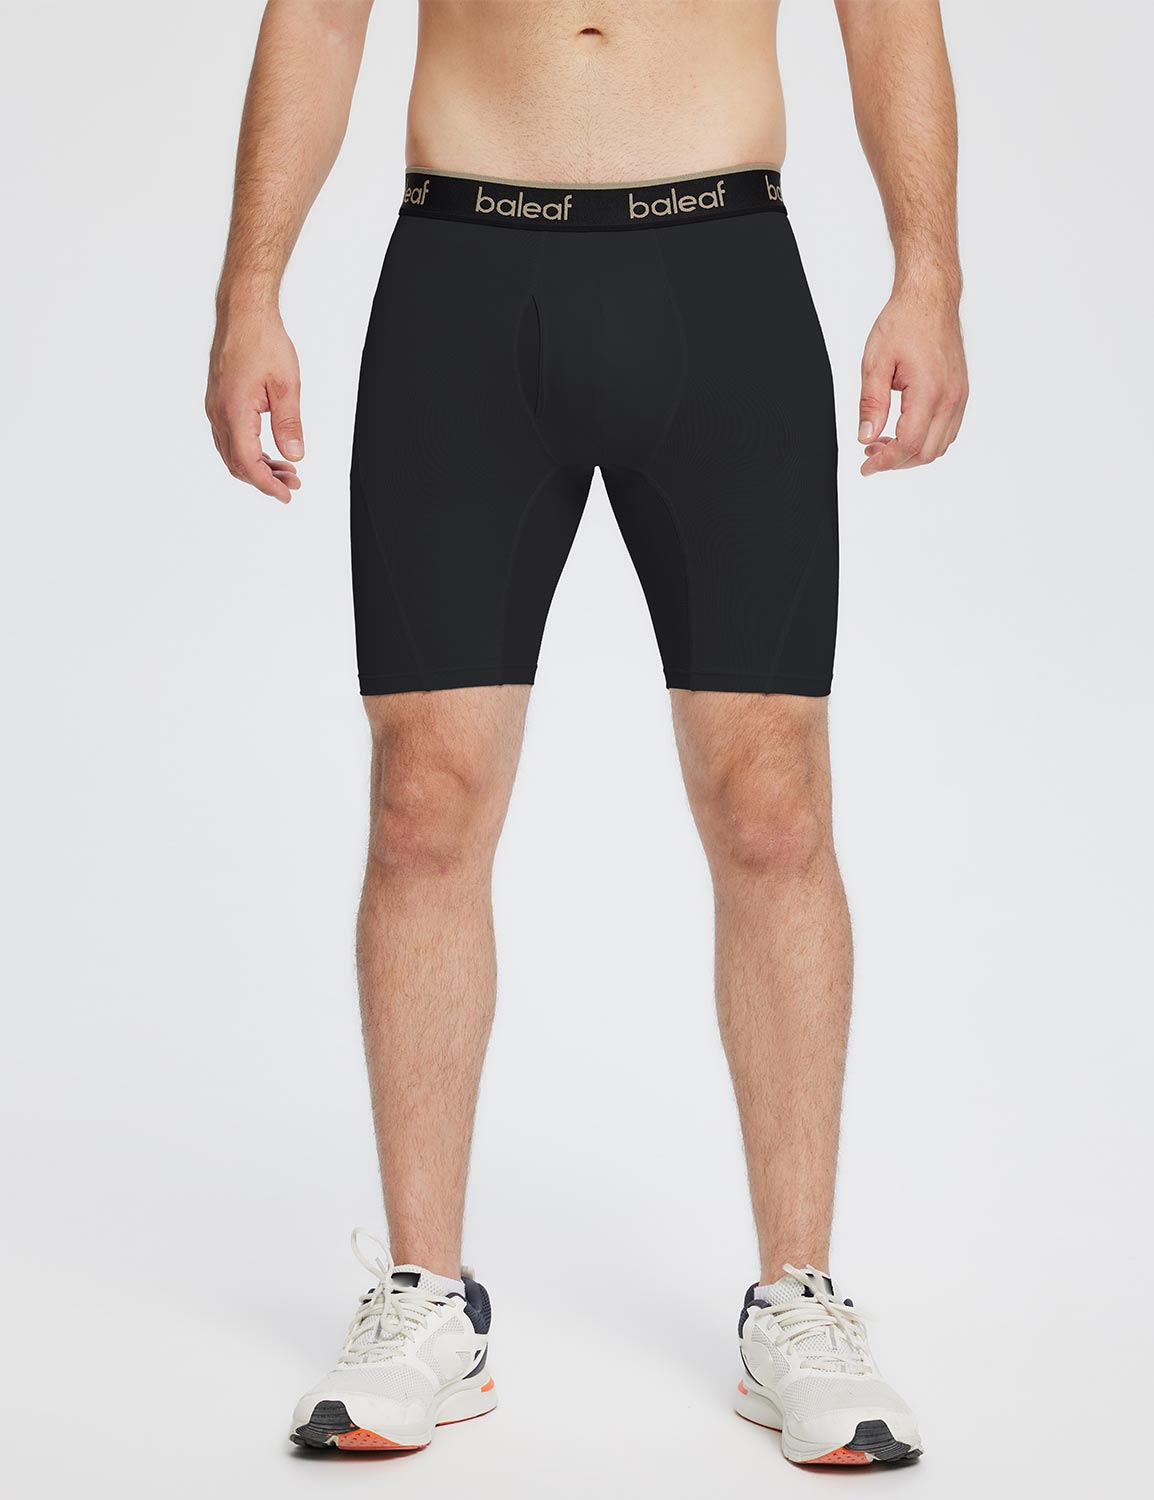 BALEAF Men's Cycling Shorts, Padded Cycling Shorts, Padded Cycling  Underpants, Cycling Shorts, Short Cycling Underwear, Cycling Clothing,  Grey, XL price in Saudi Arabia,  Saudi Arabia